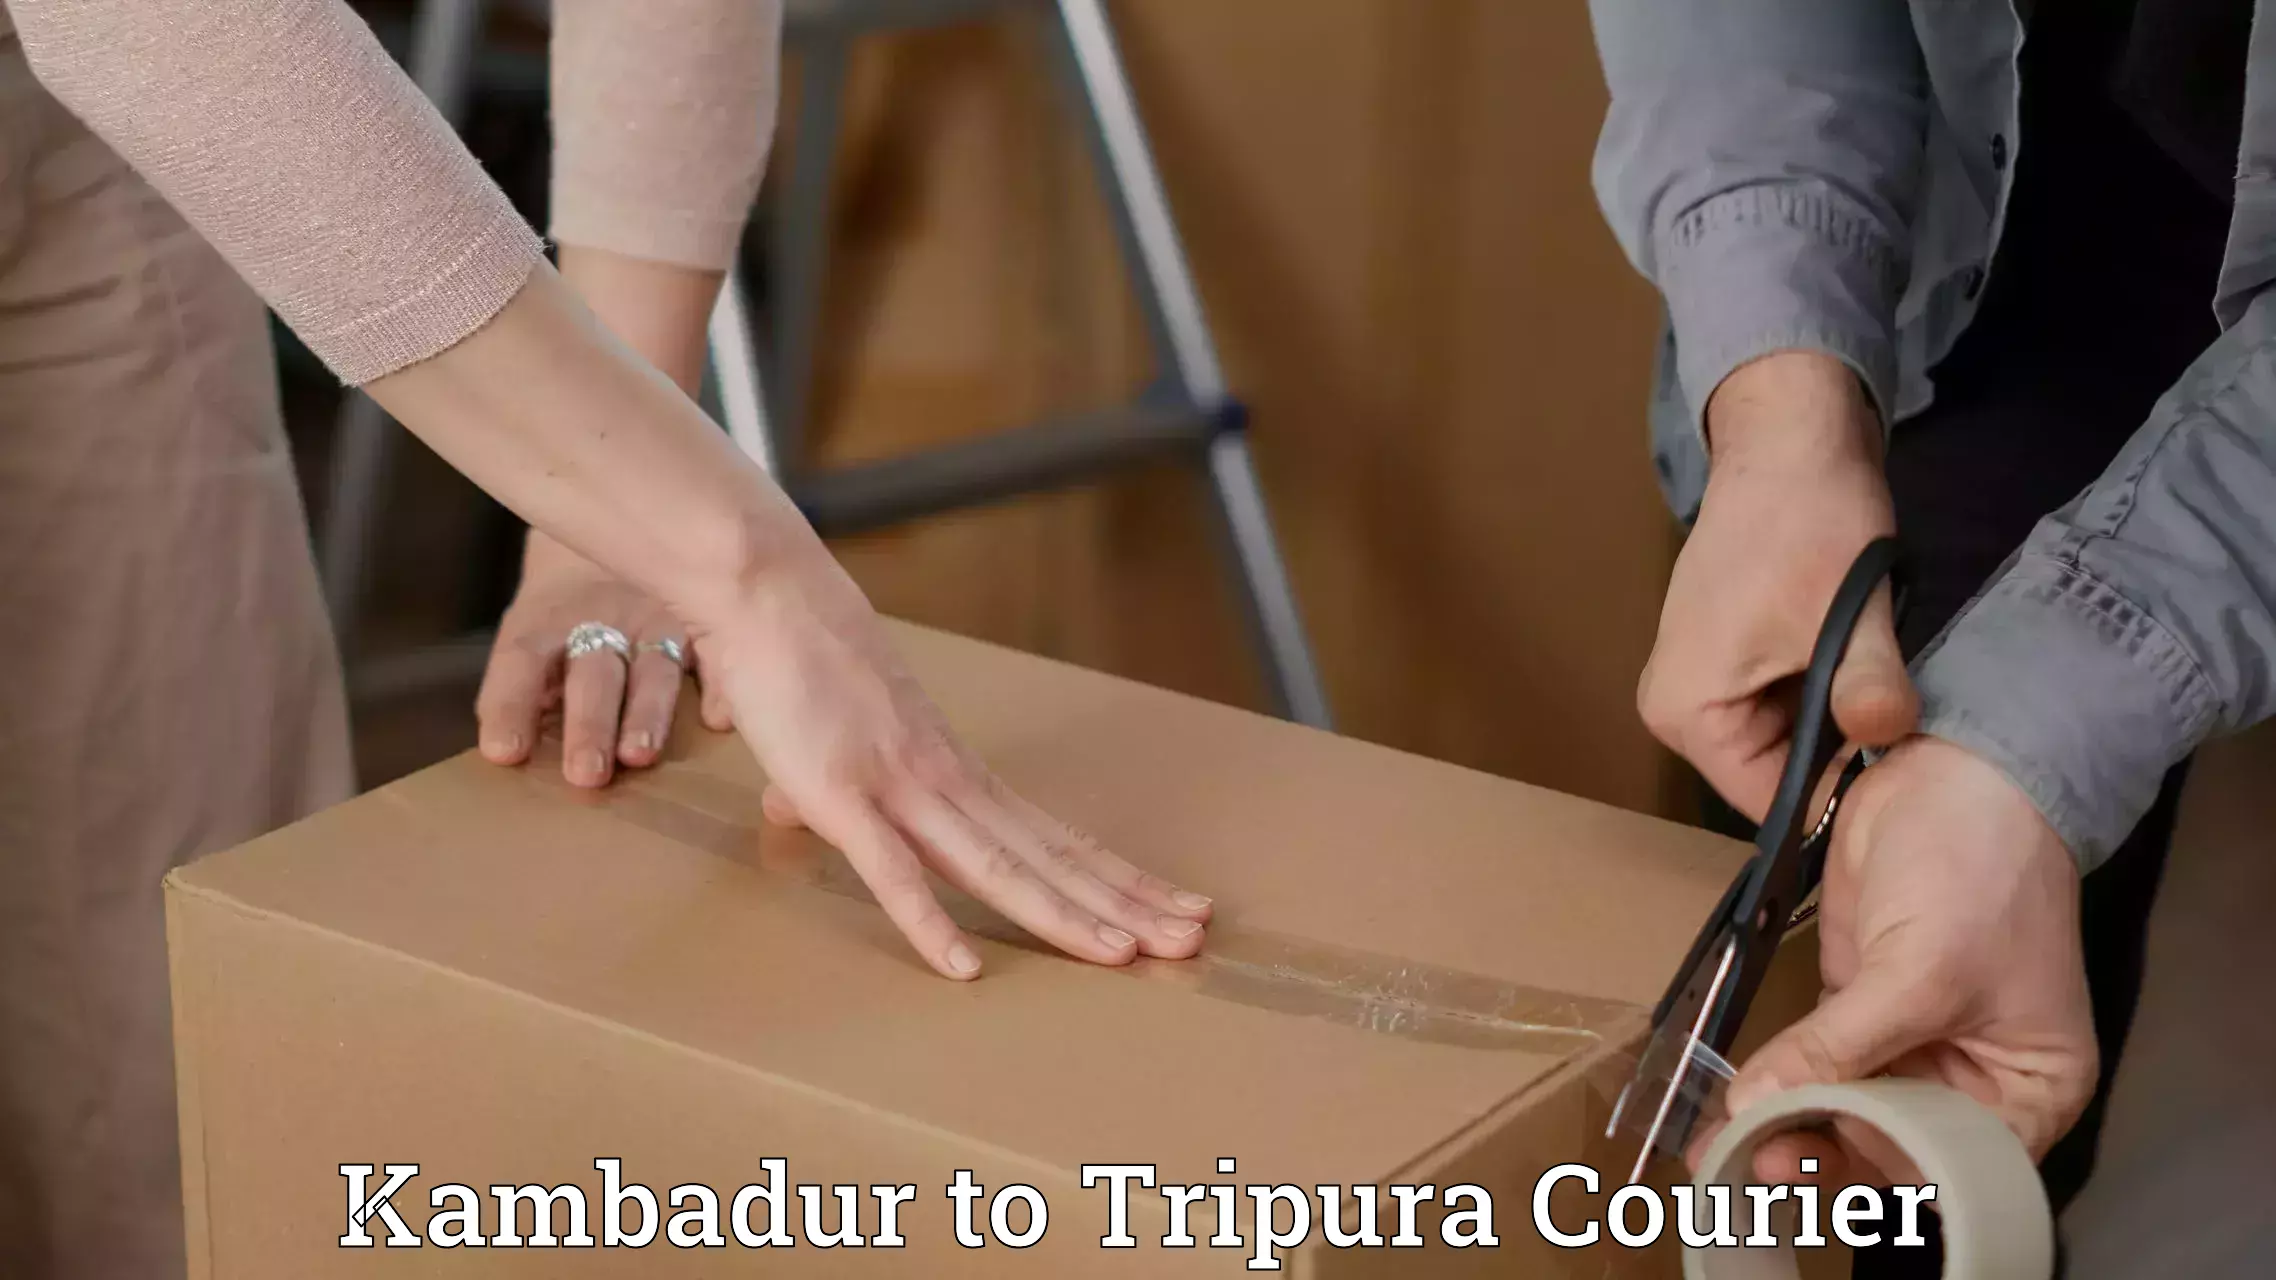 On-demand courier Kambadur to West Tripura